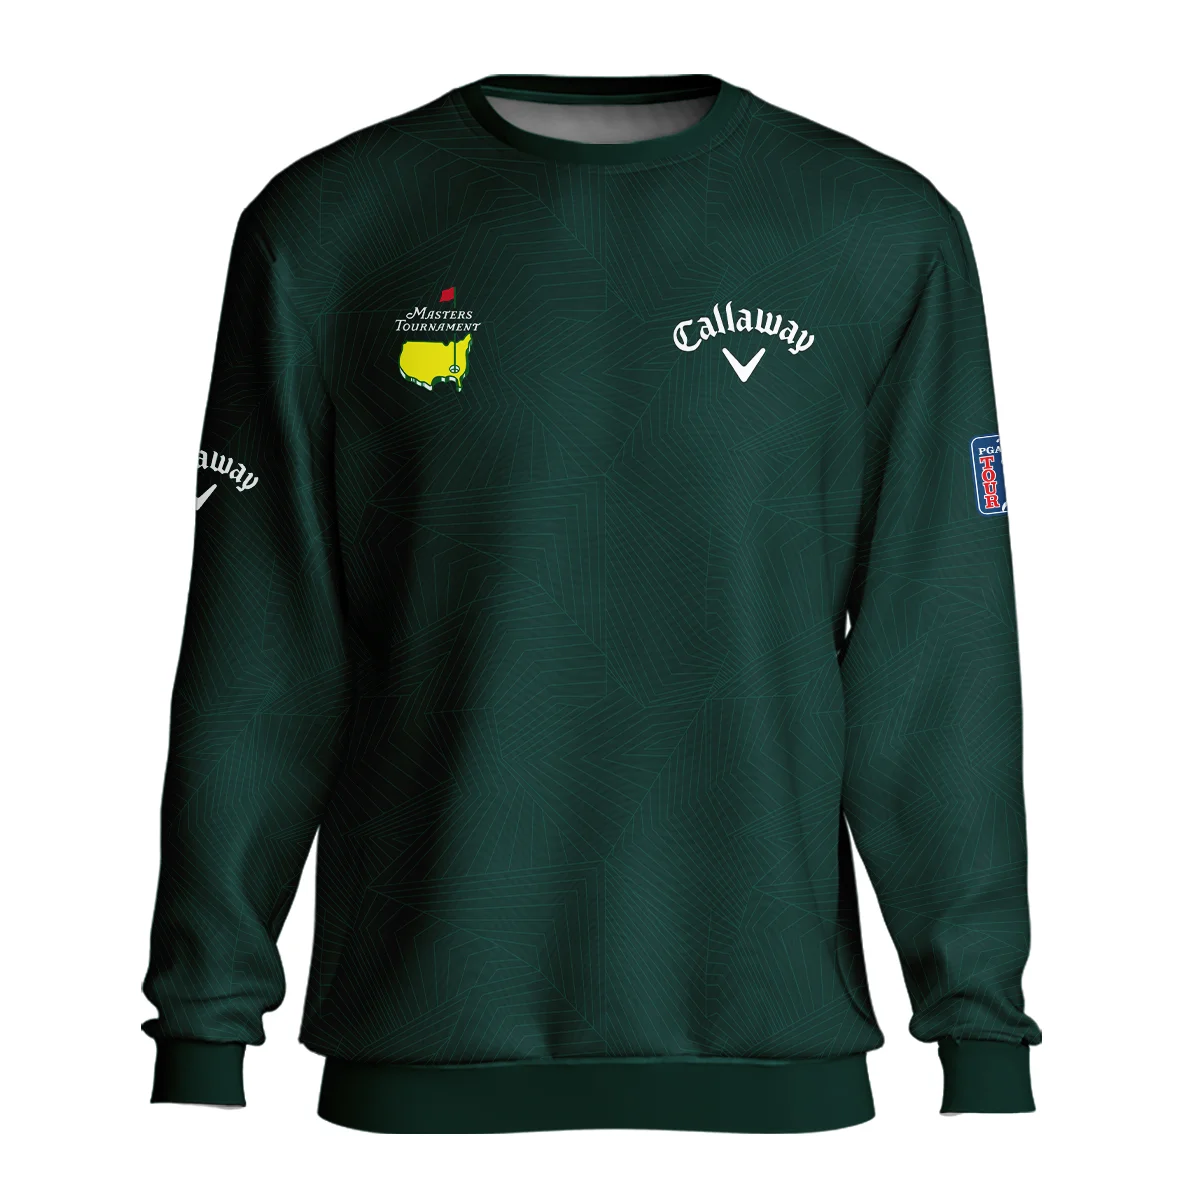 Masters Tournament Callaway Pattern Sport Jersey Dark Green Unisex Sweatshirt Style Classic Sweatshirt